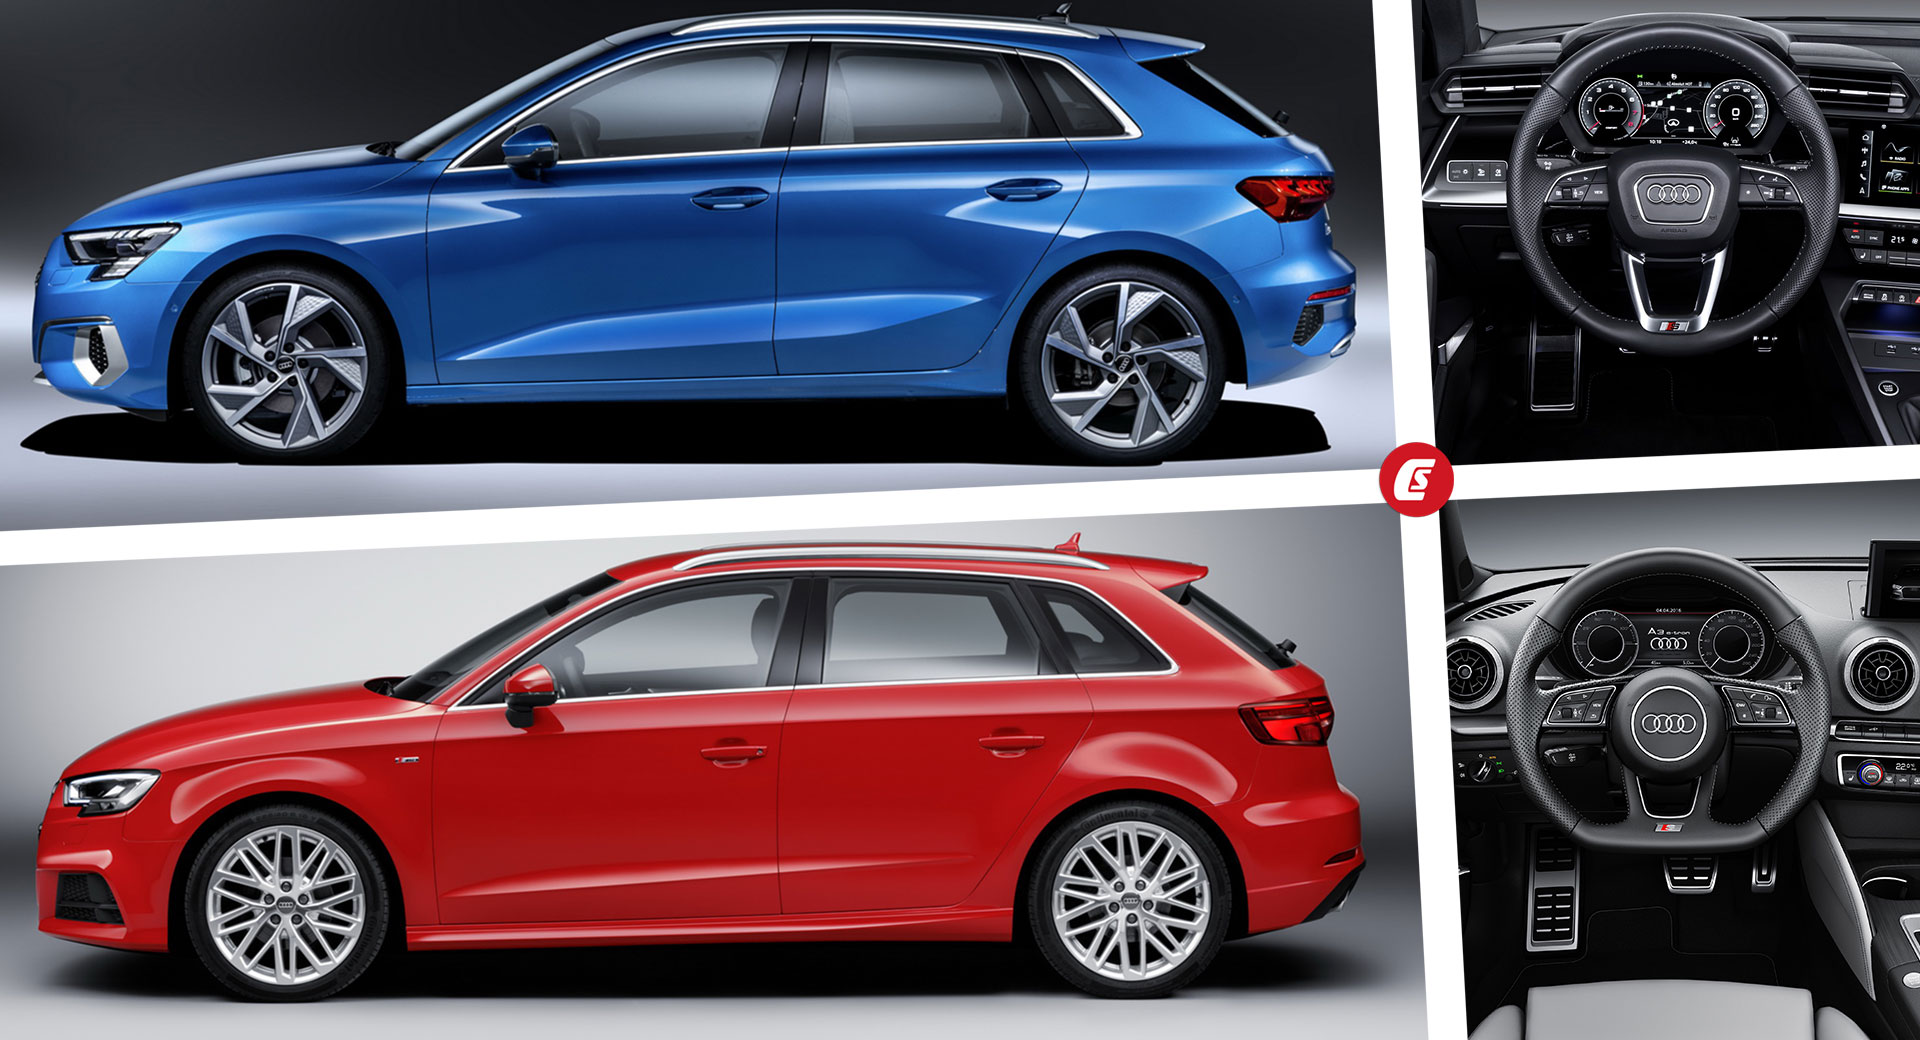 Audi A1 vs A3 side-by-side comparison